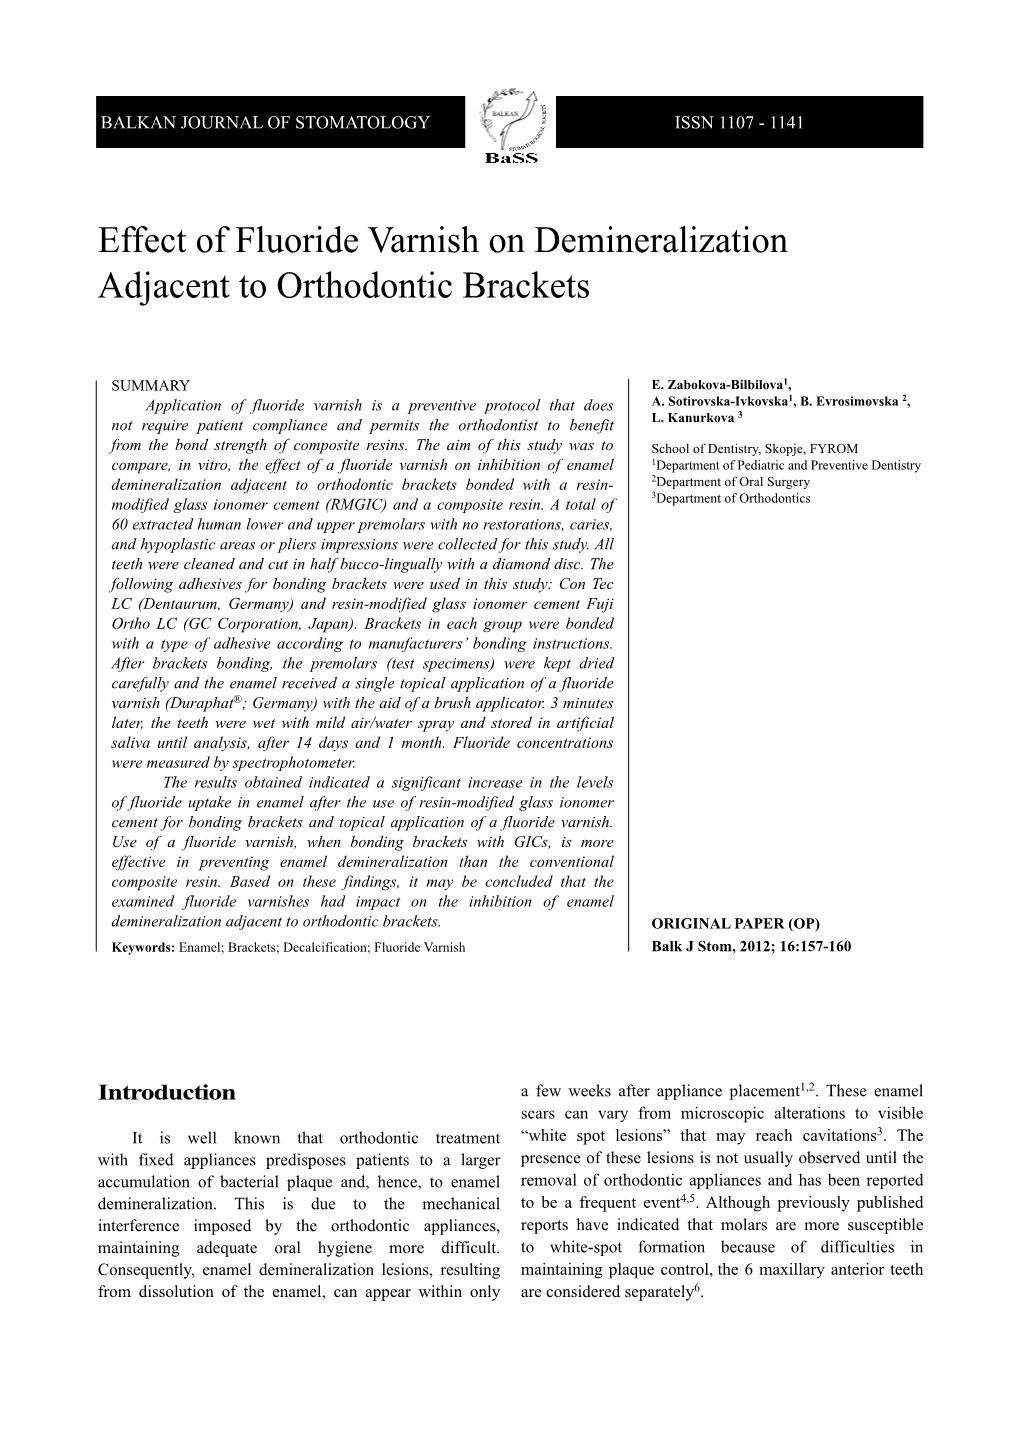 Effect of Fluoride Varnish on Demineralization Adjacent to Orthodontic Brackets